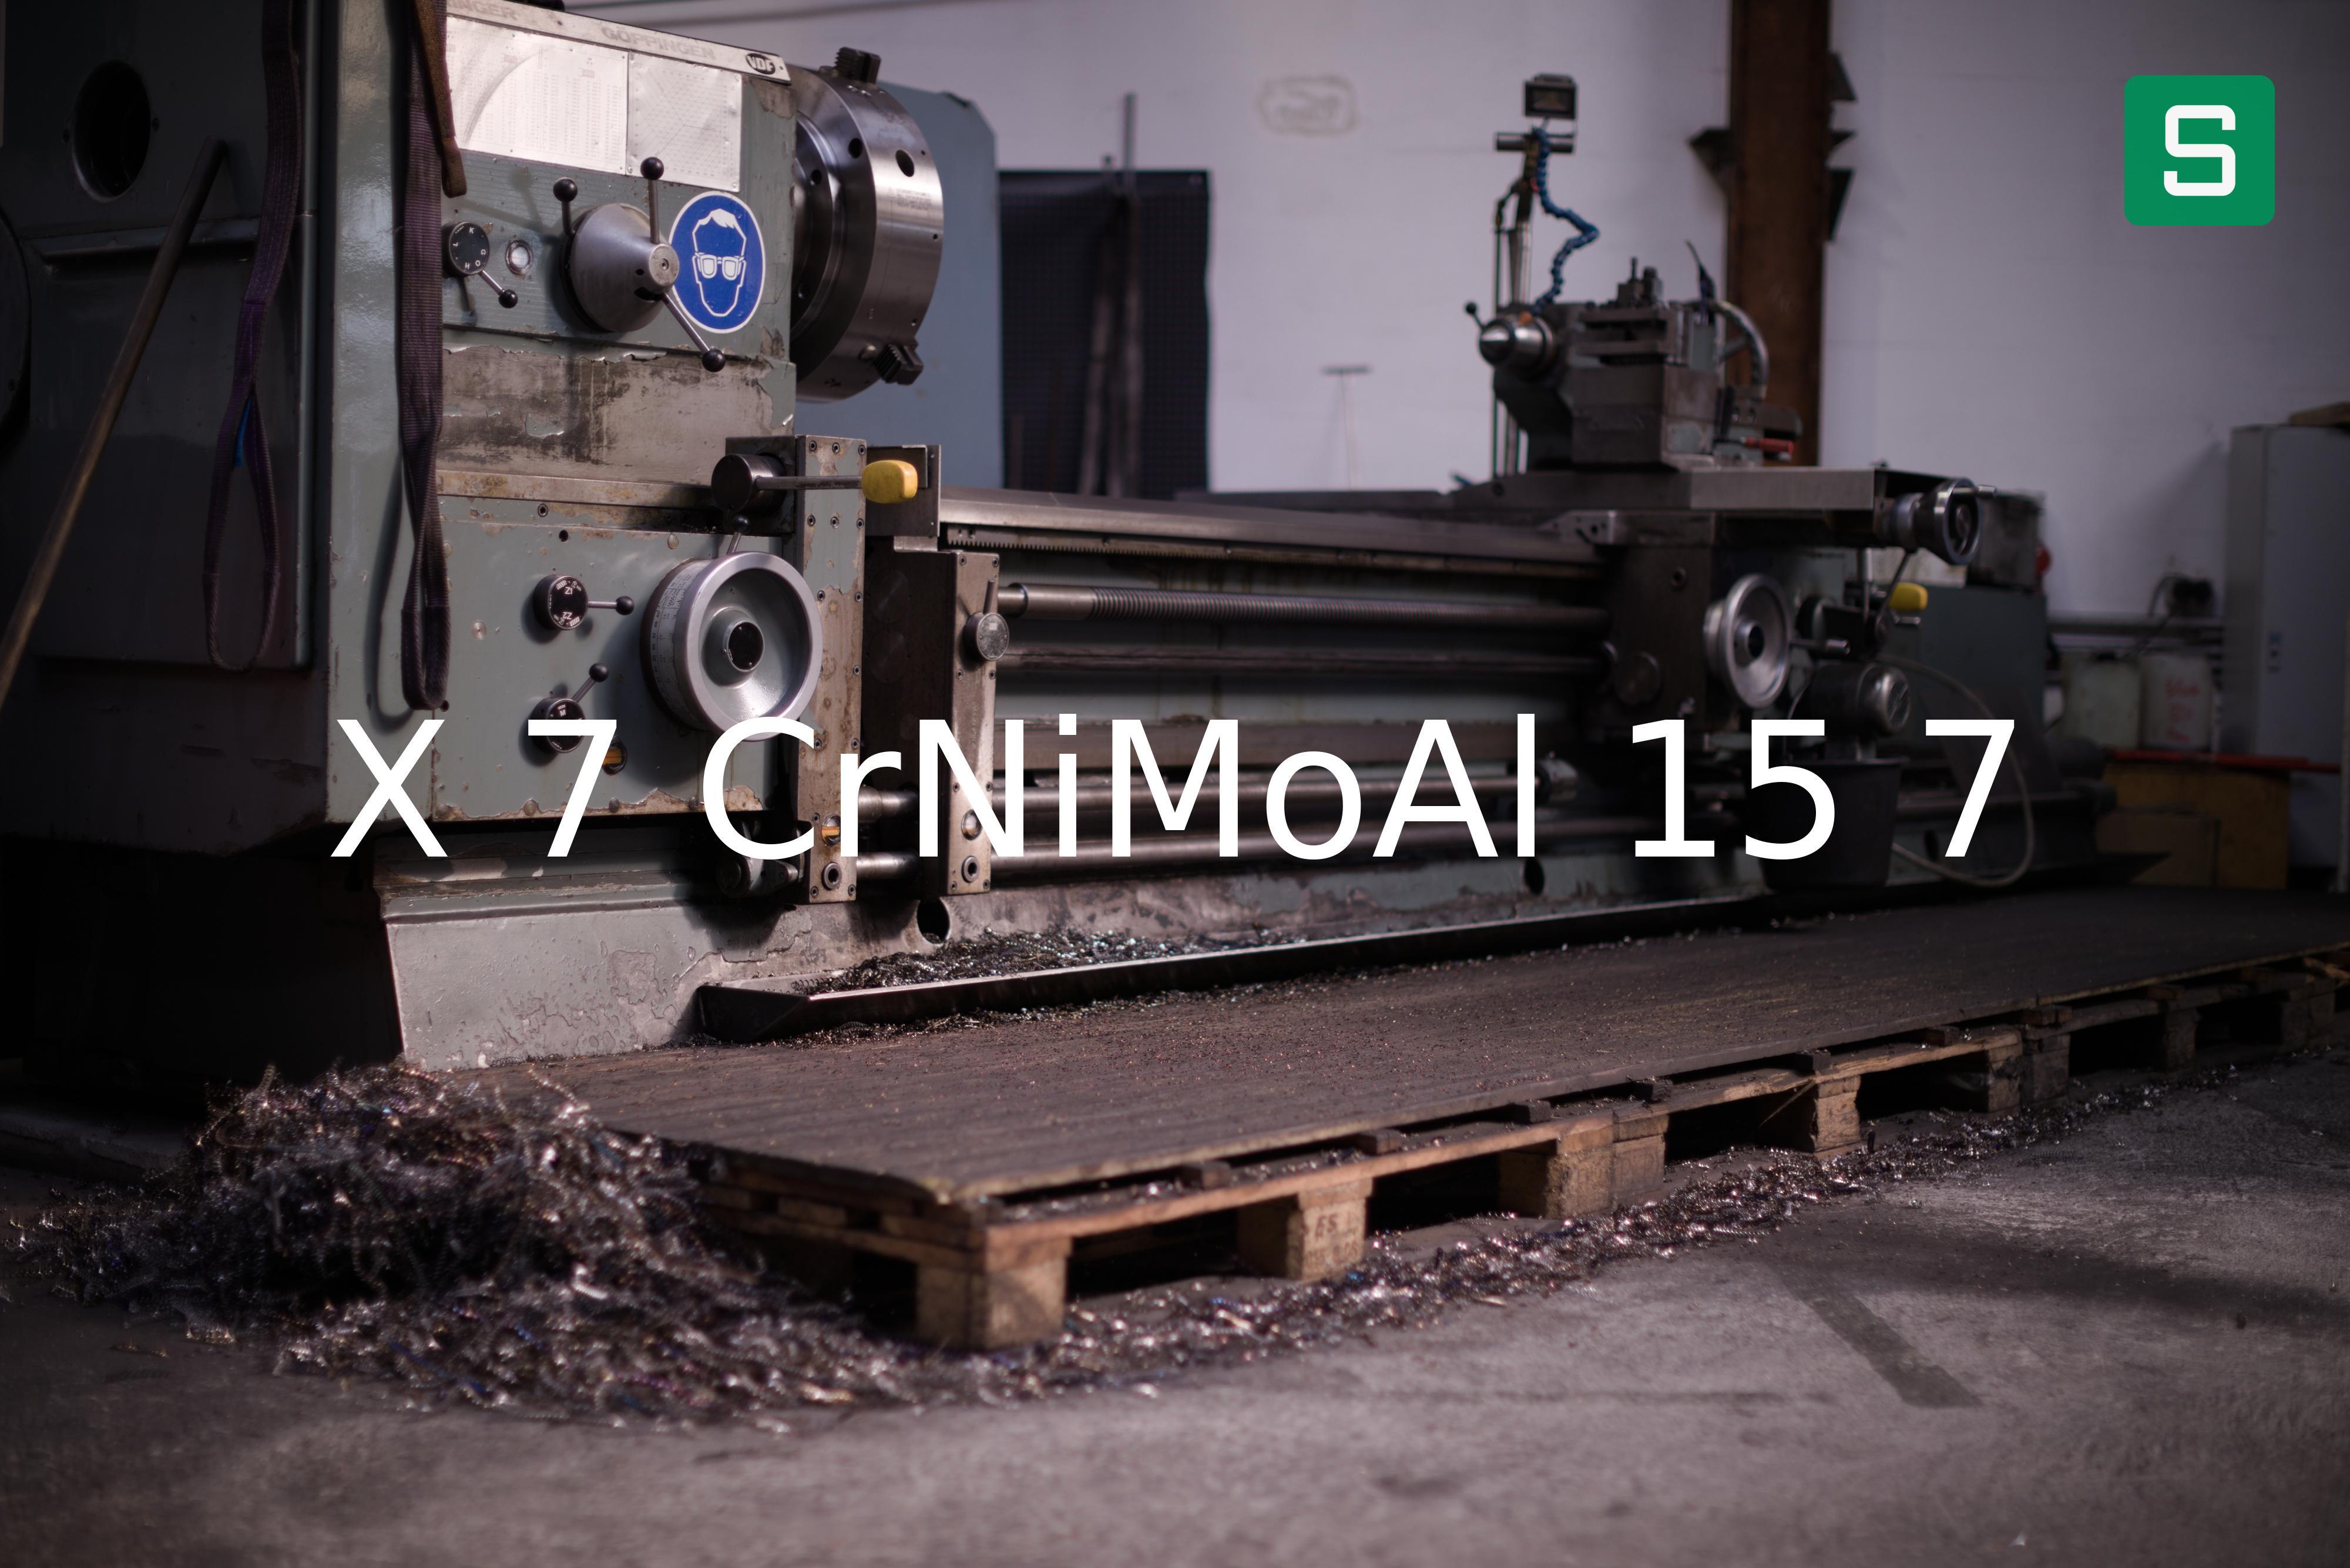 Steel Material: X 7 CrNiMoAl 15 7